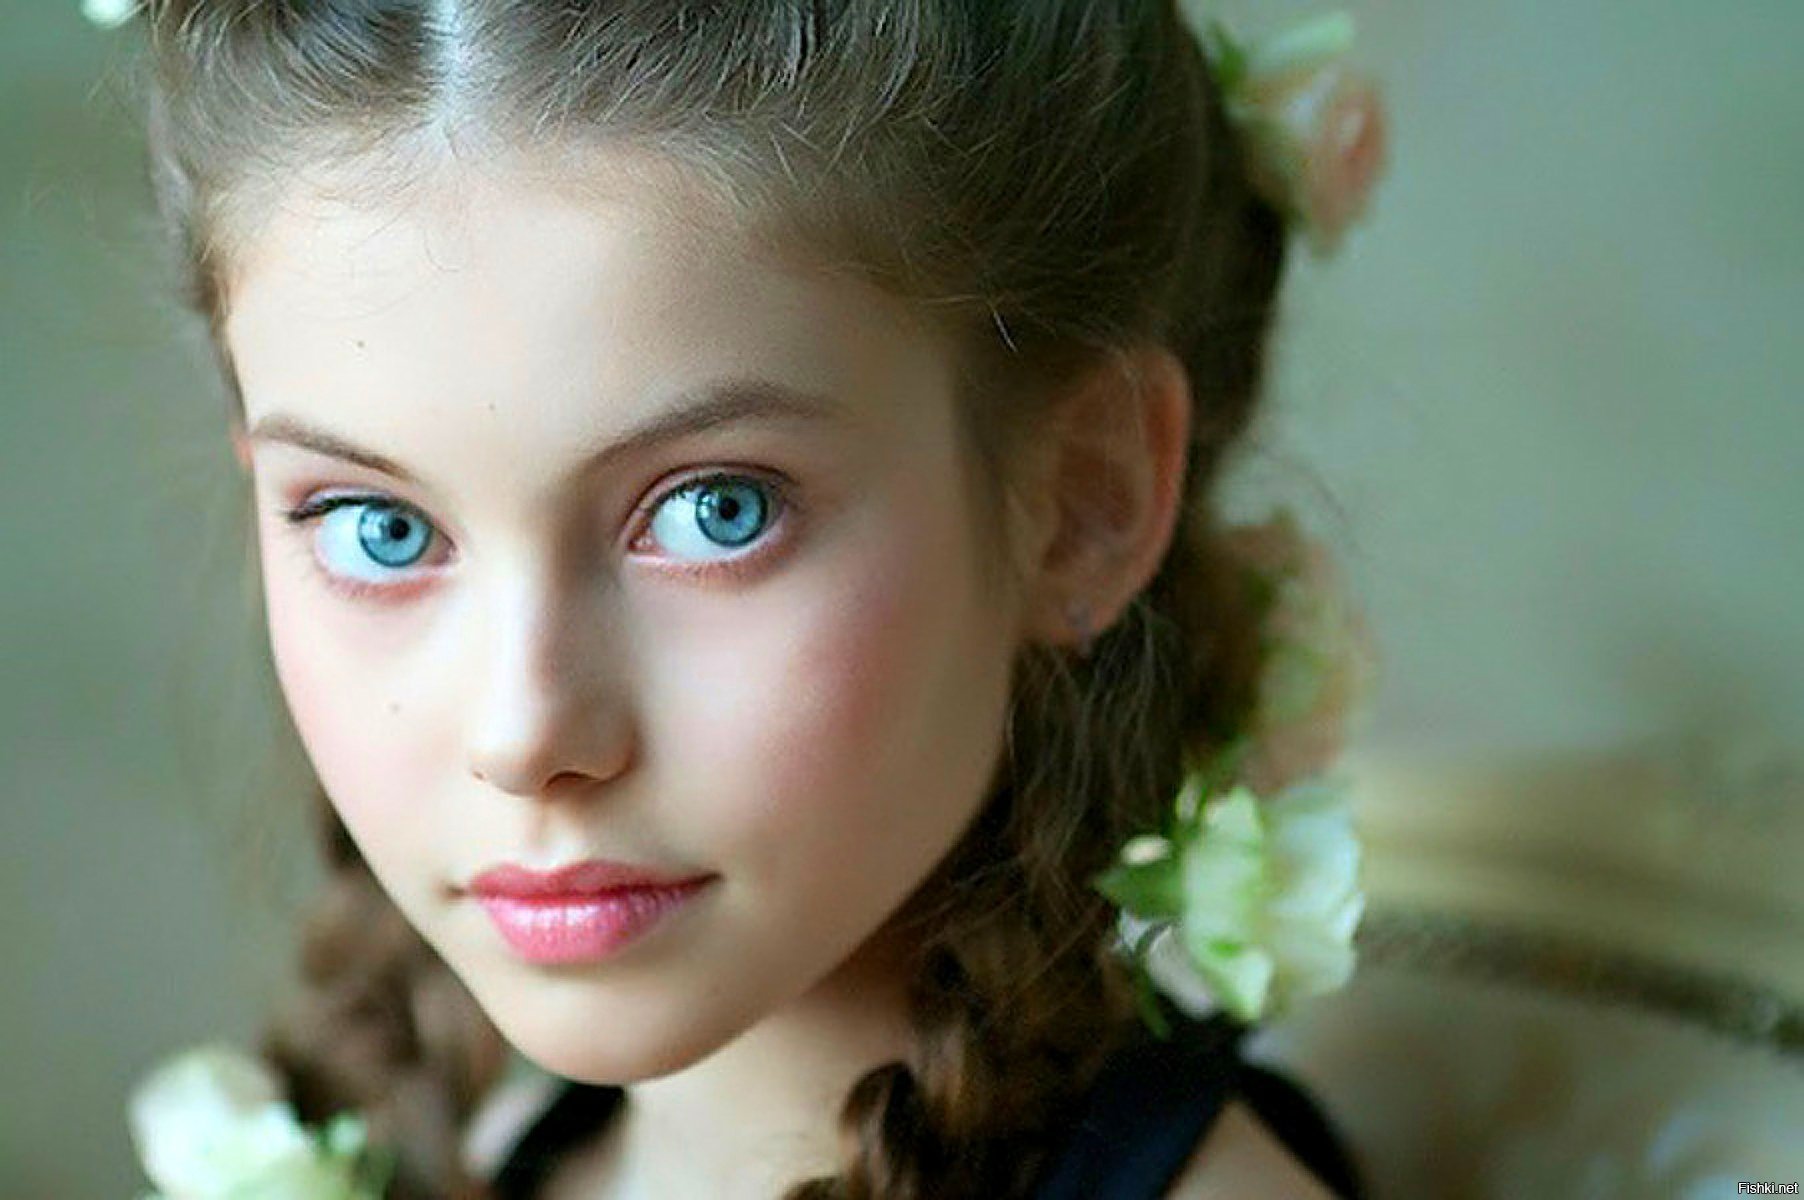 Teen Girls With Beautiful Eyes